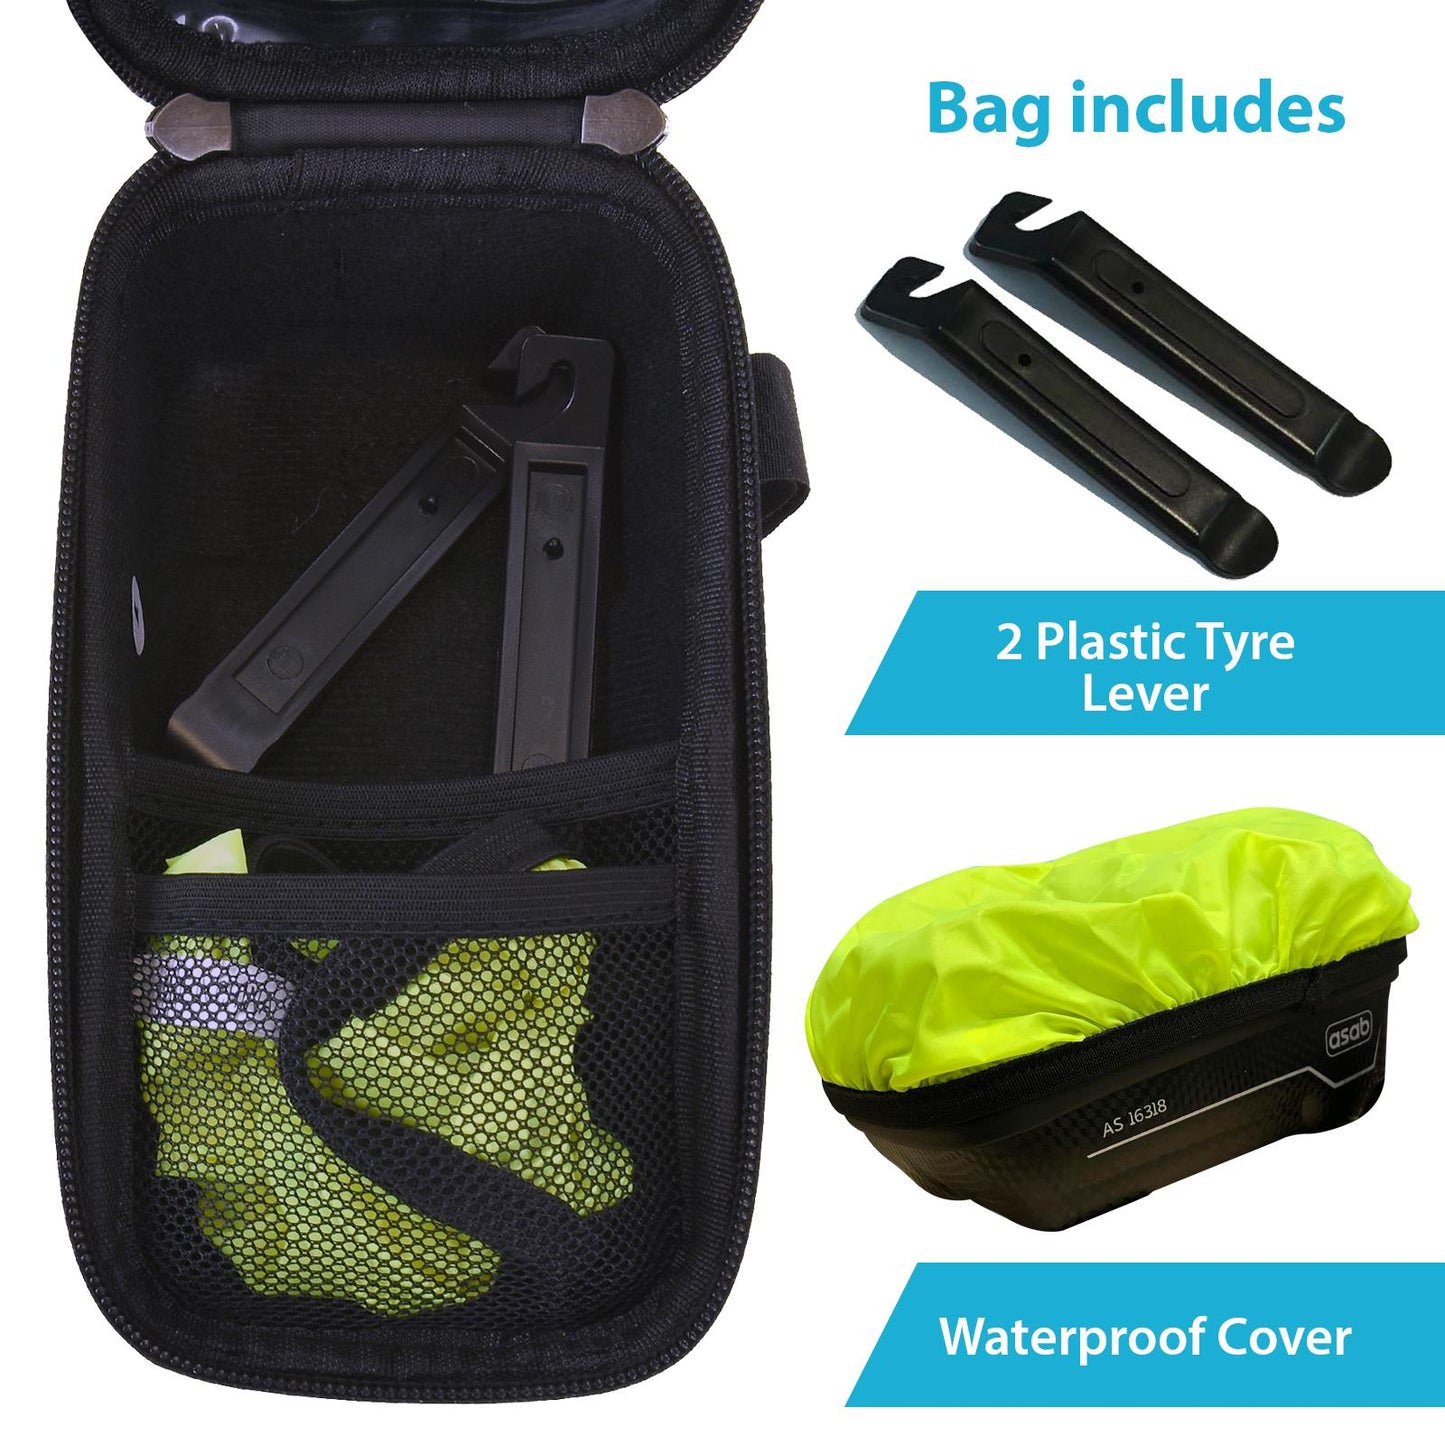 Waterproof Bike Frame Bag Phone Mobile Holder